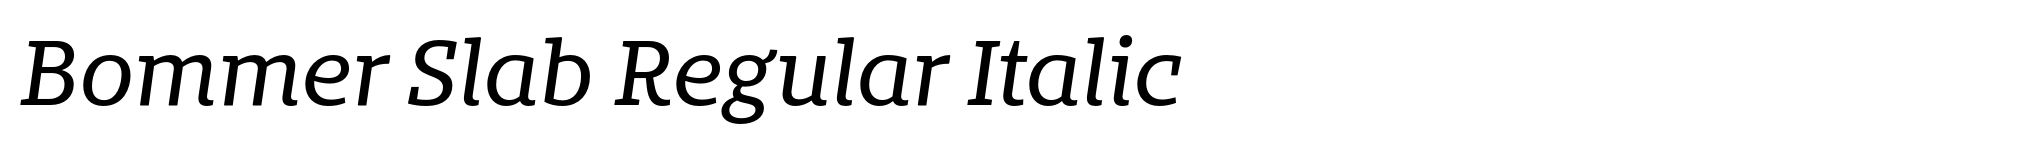 Bommer Slab Regular Italic image